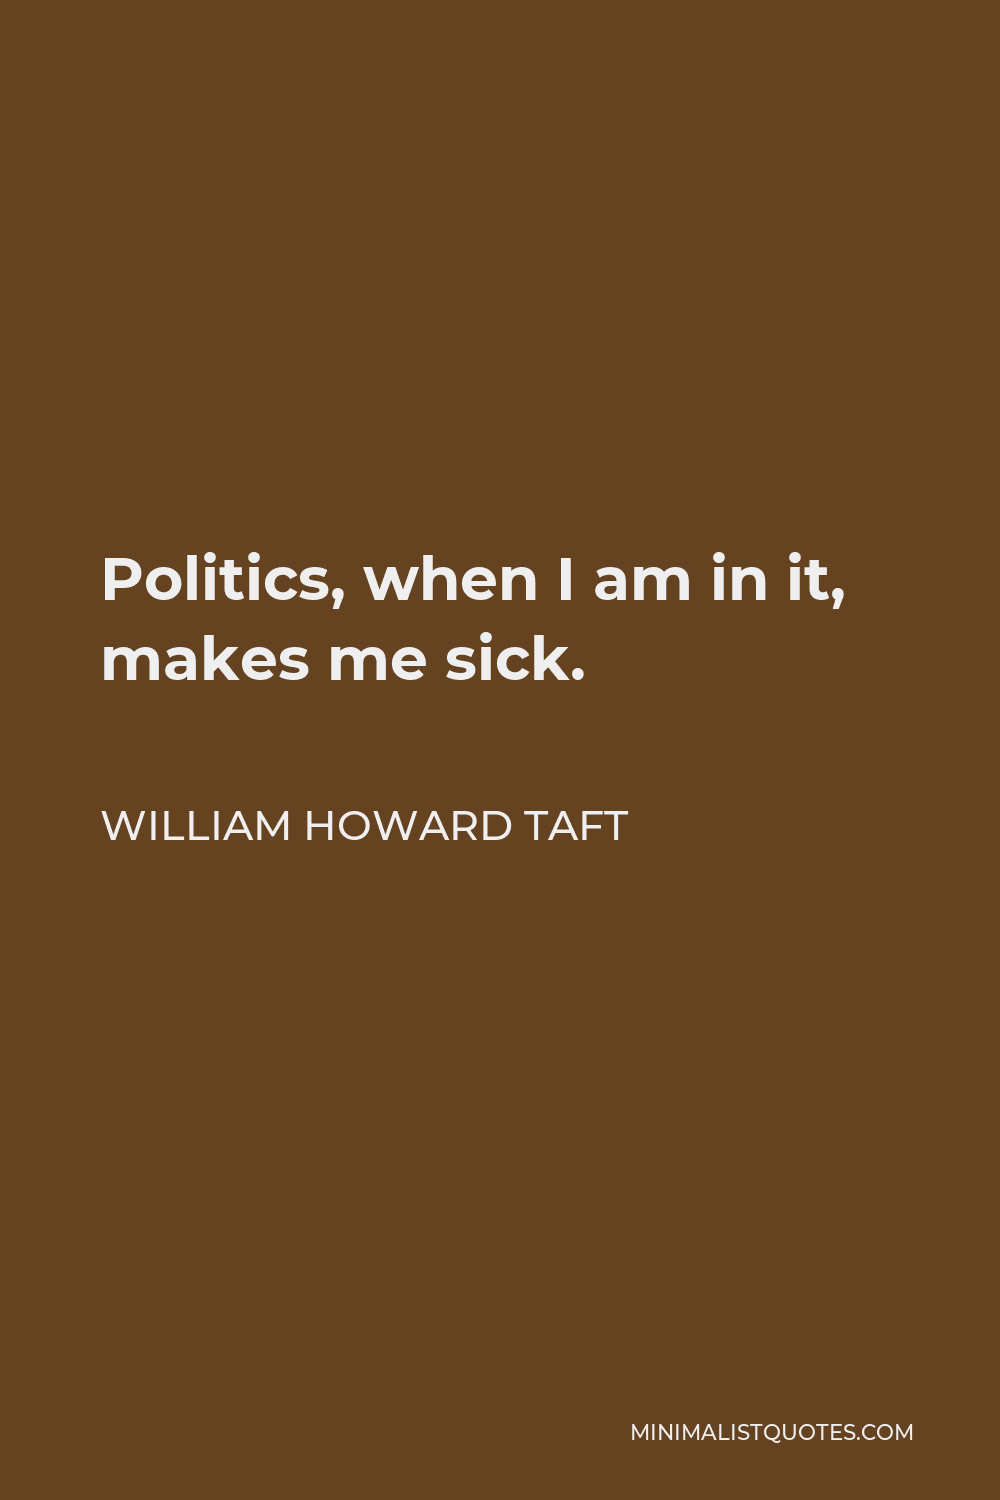 William Howard Taft Quote - Politics, when I am in it, makes me sick.